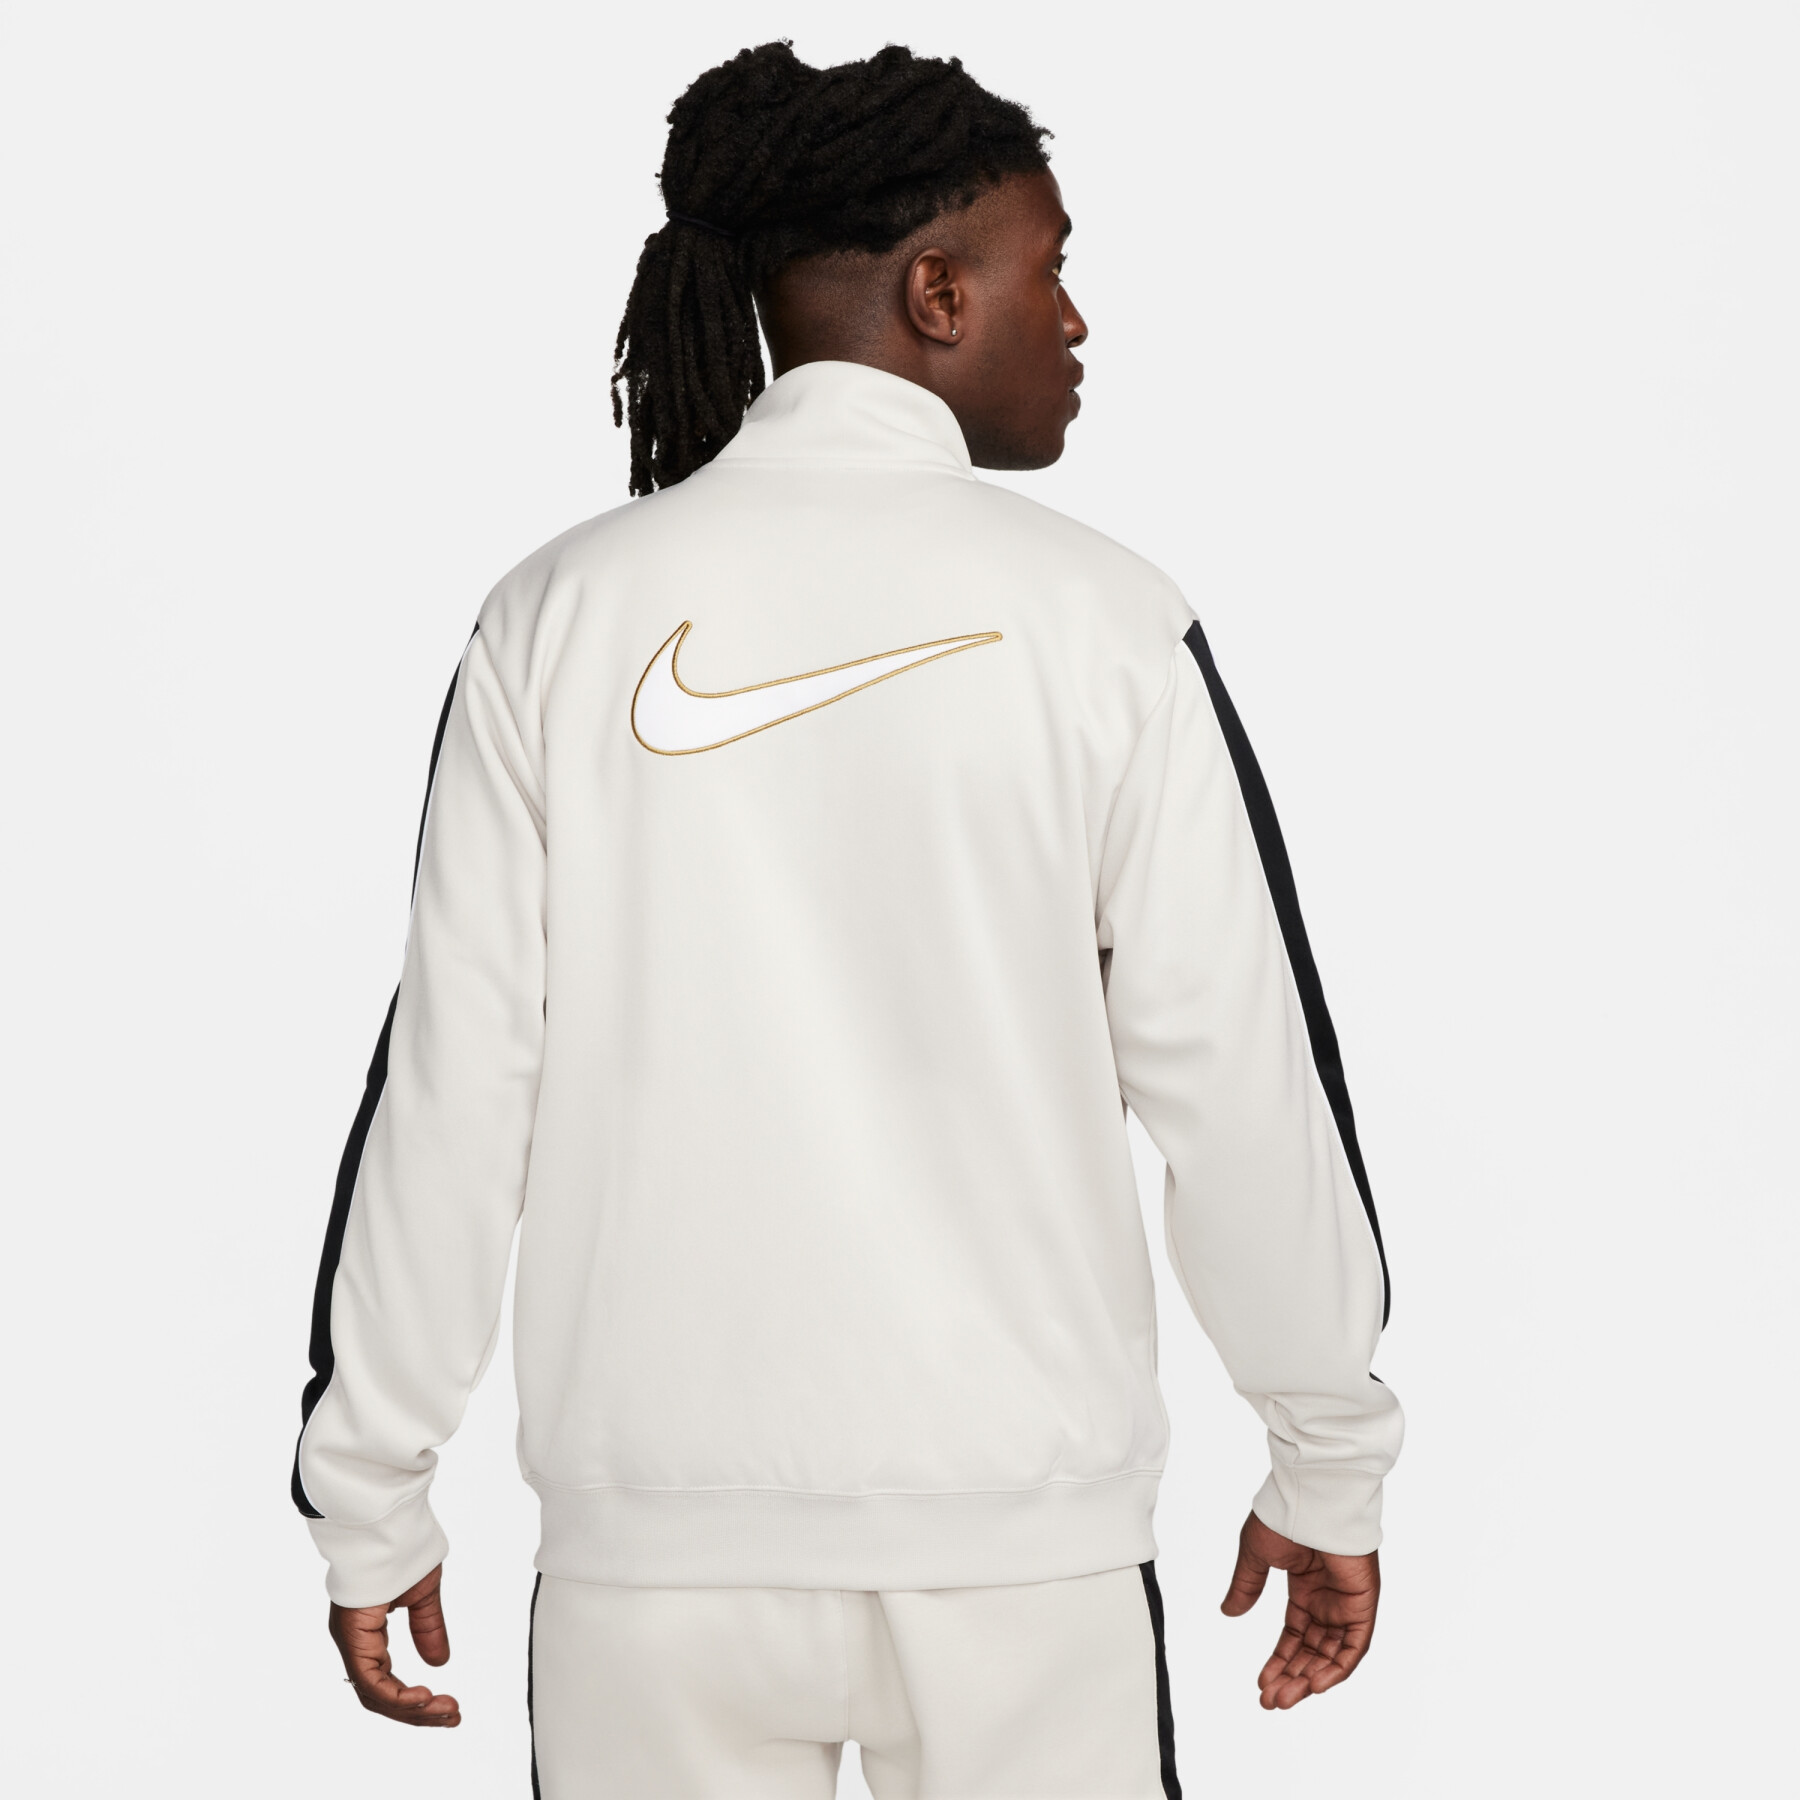 Sweat jacket Nike